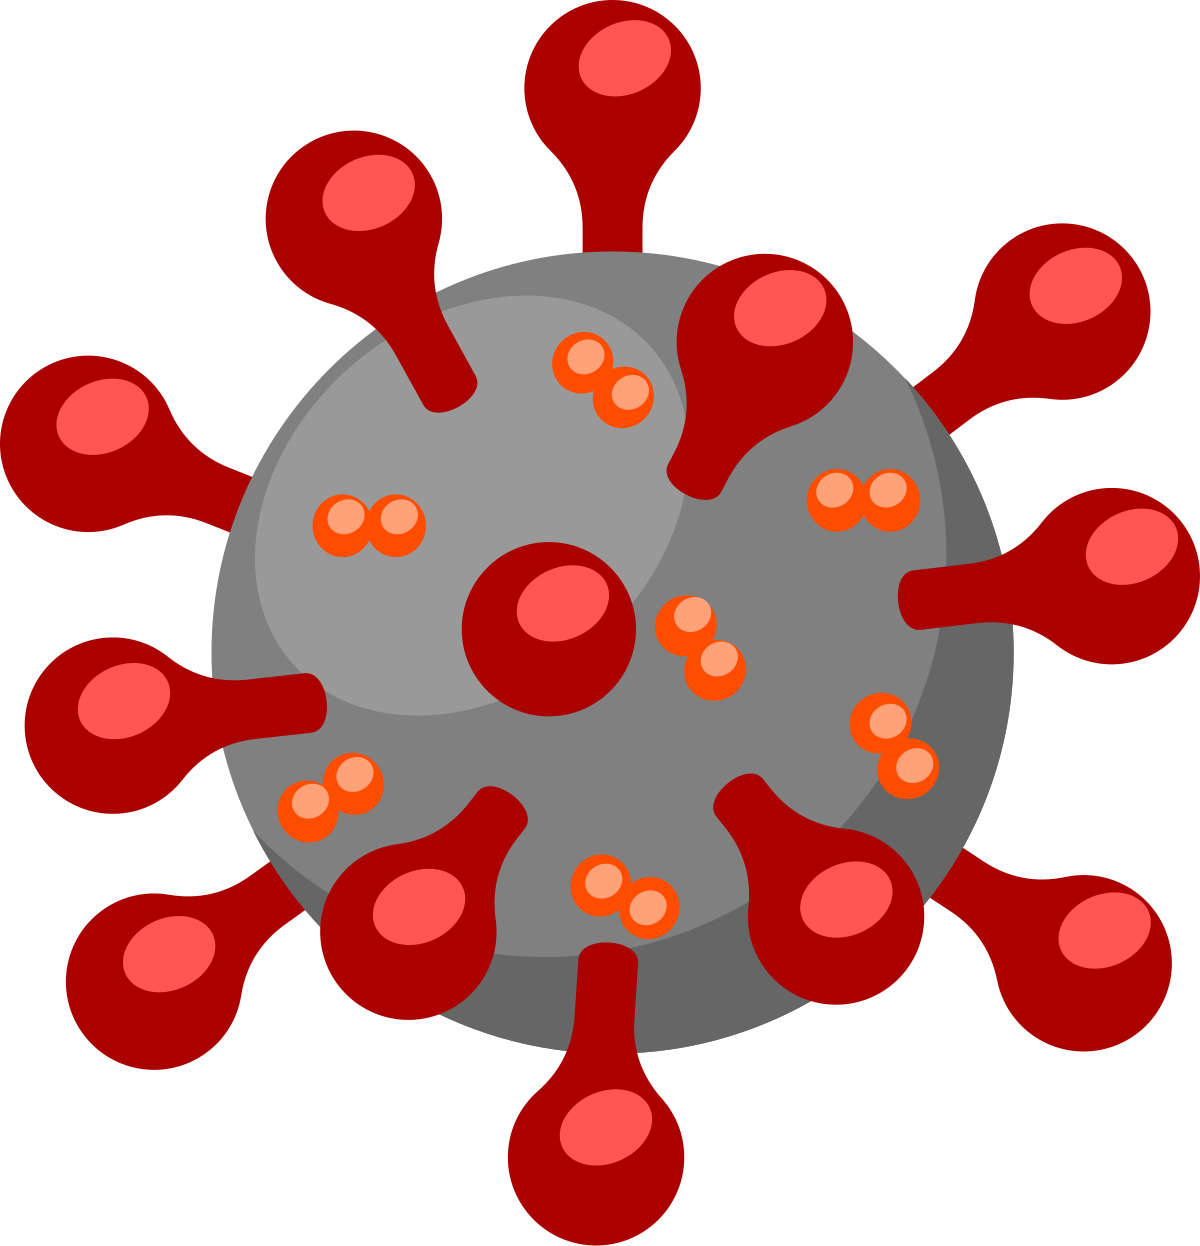 Download File:Coronavirus cartoon.svg - Wikimedia Commons